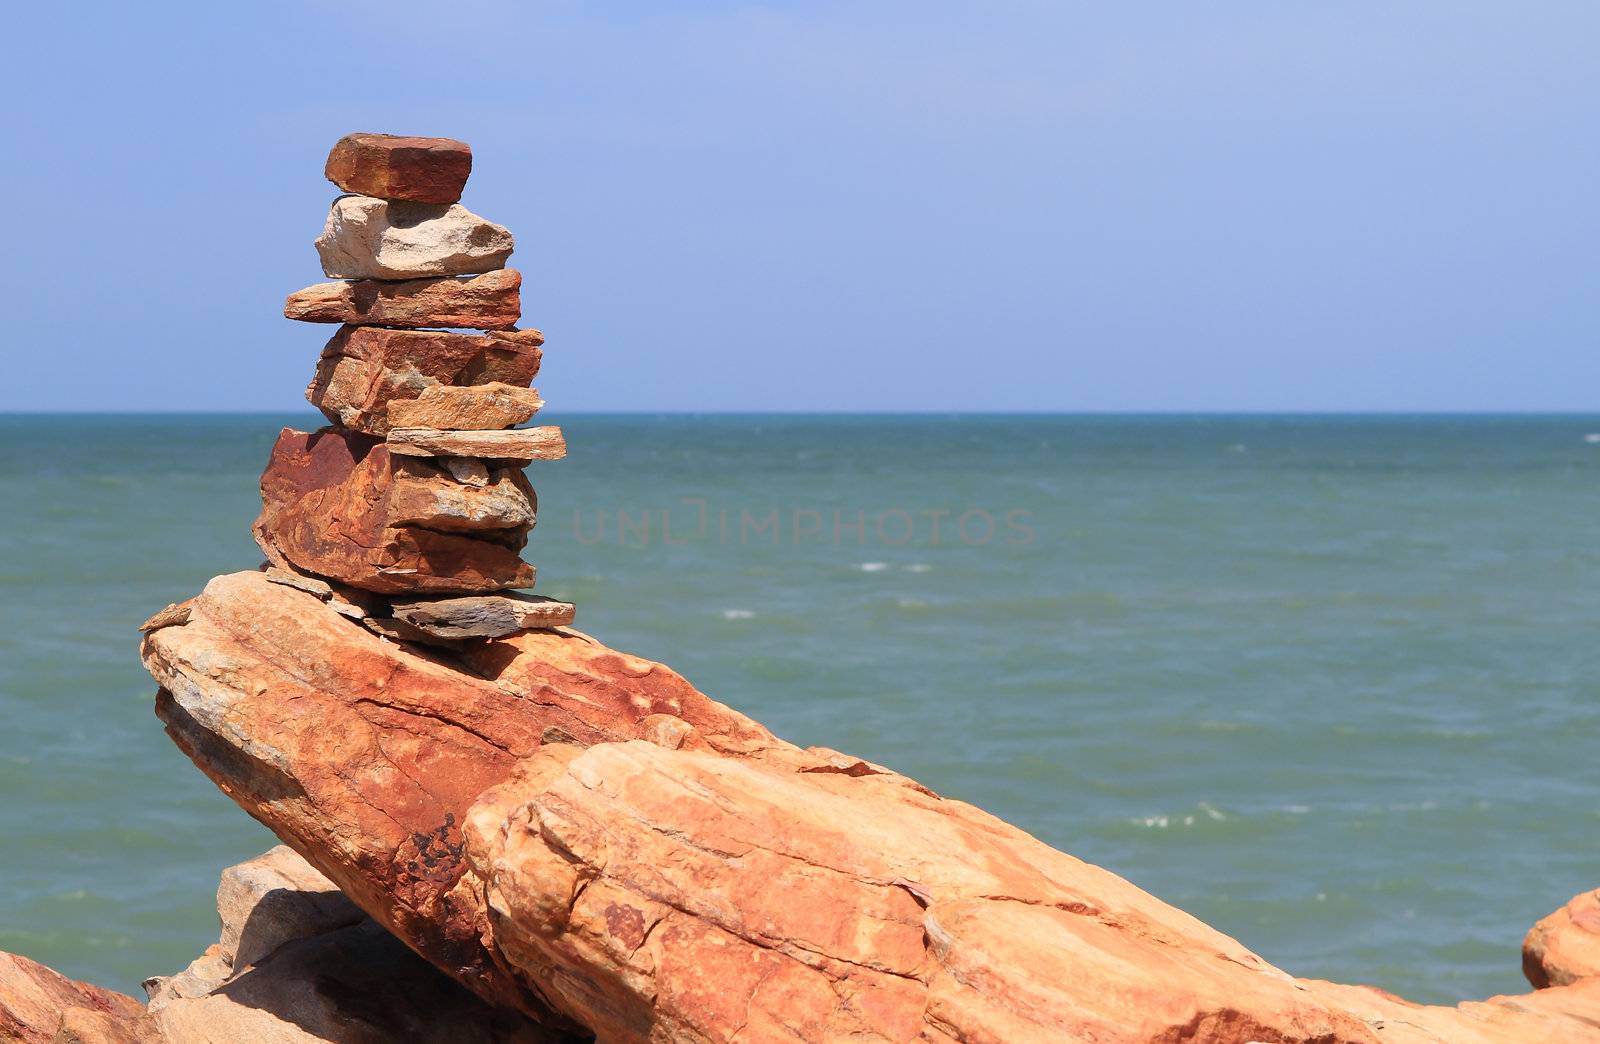 Pebble stone pyramid against blue sea by rufous